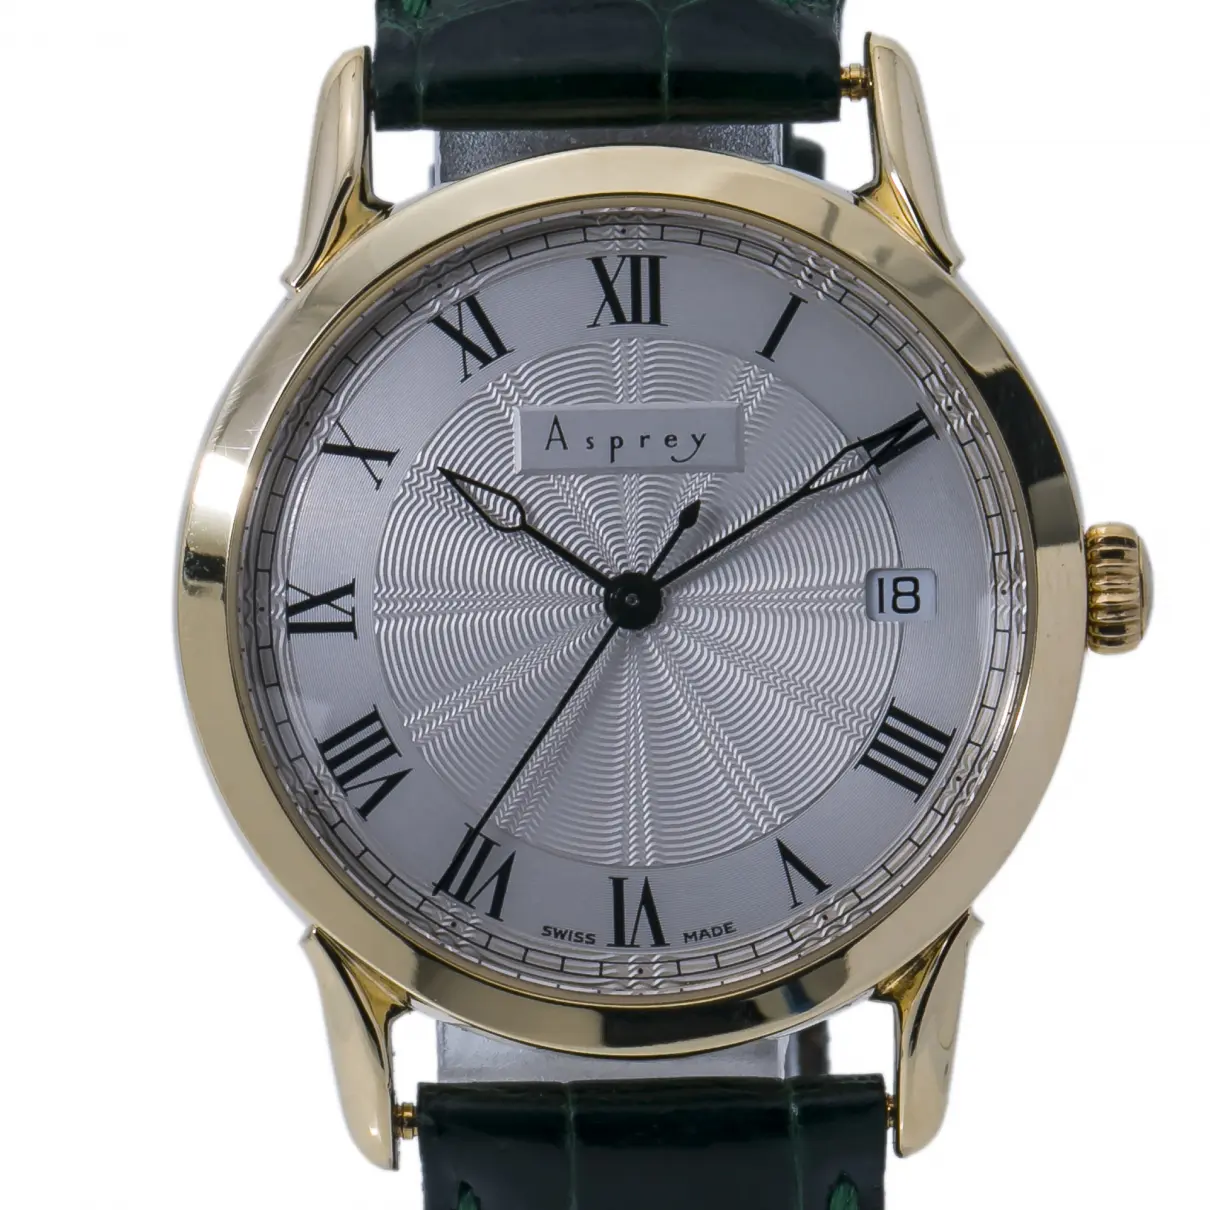 Buy Asprey Of London Yellow gold watch online